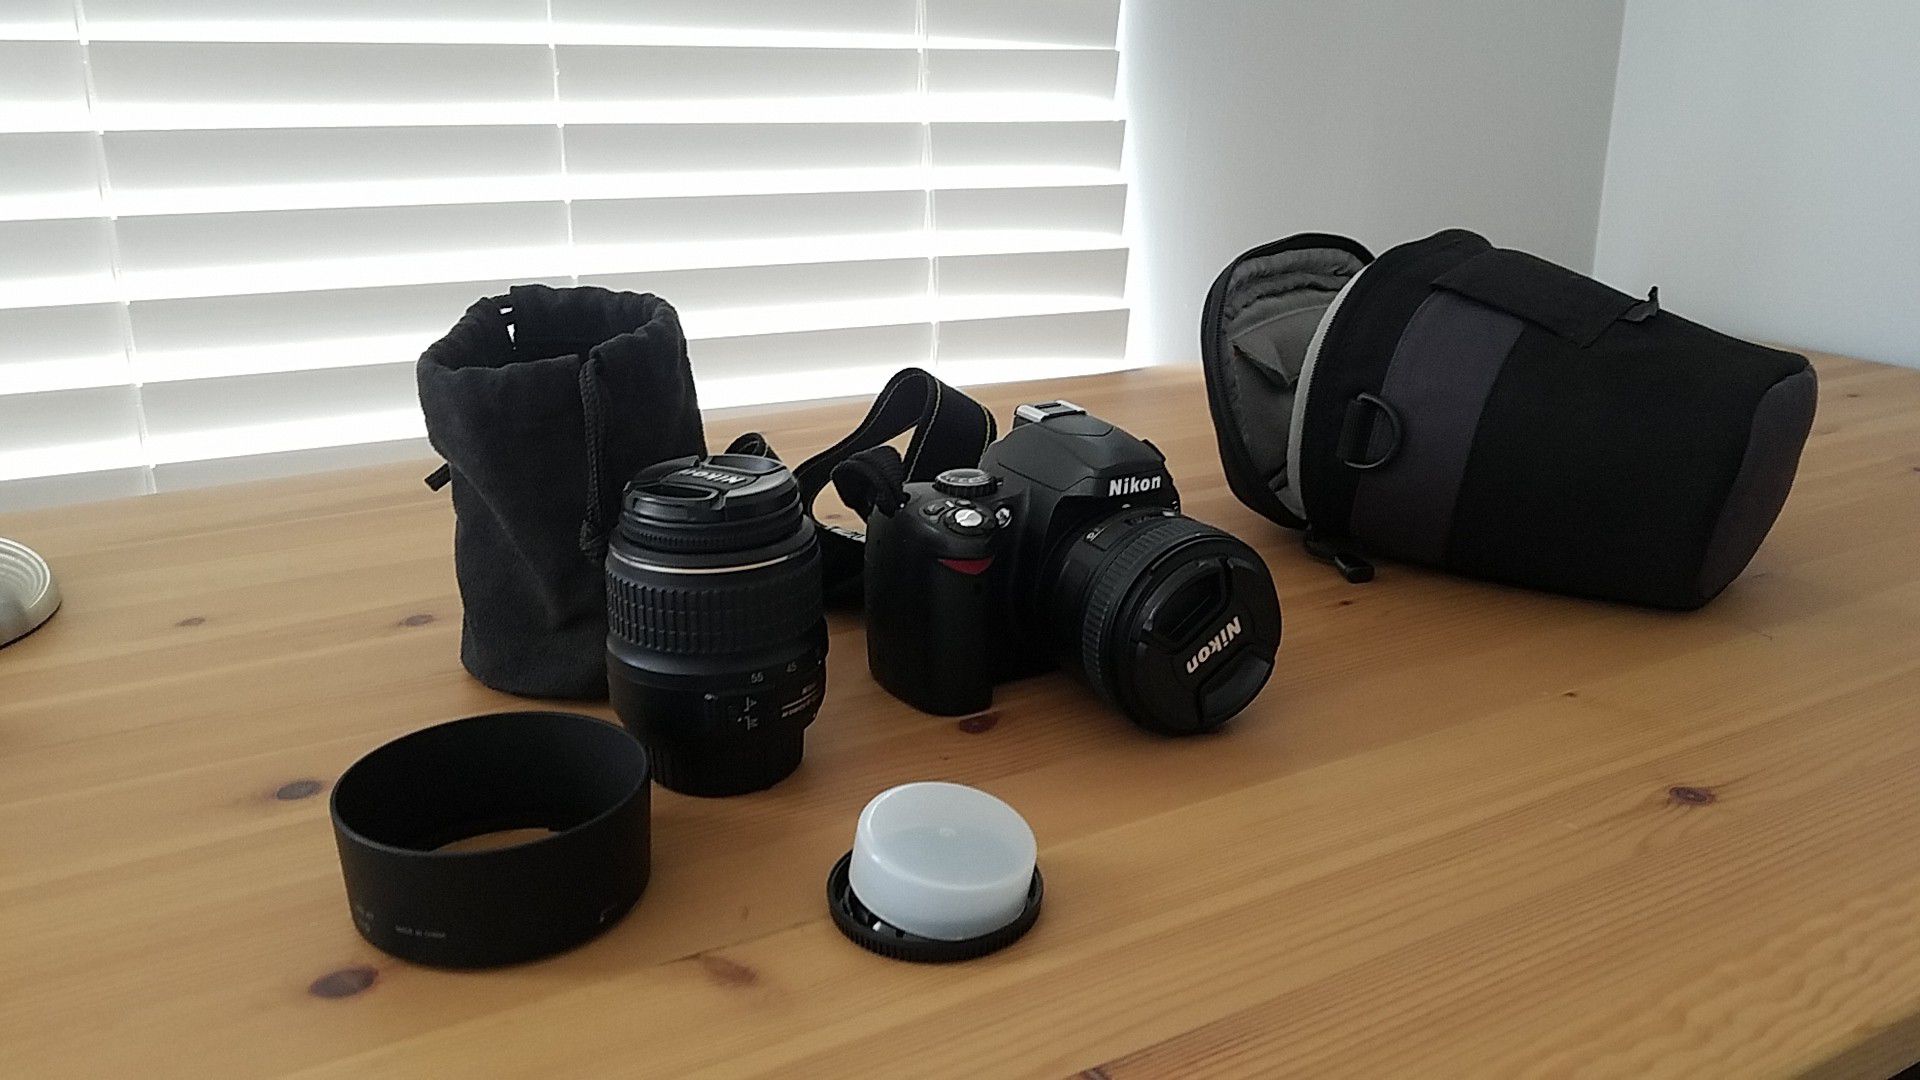 Nikon D40 digital camera w/ lense